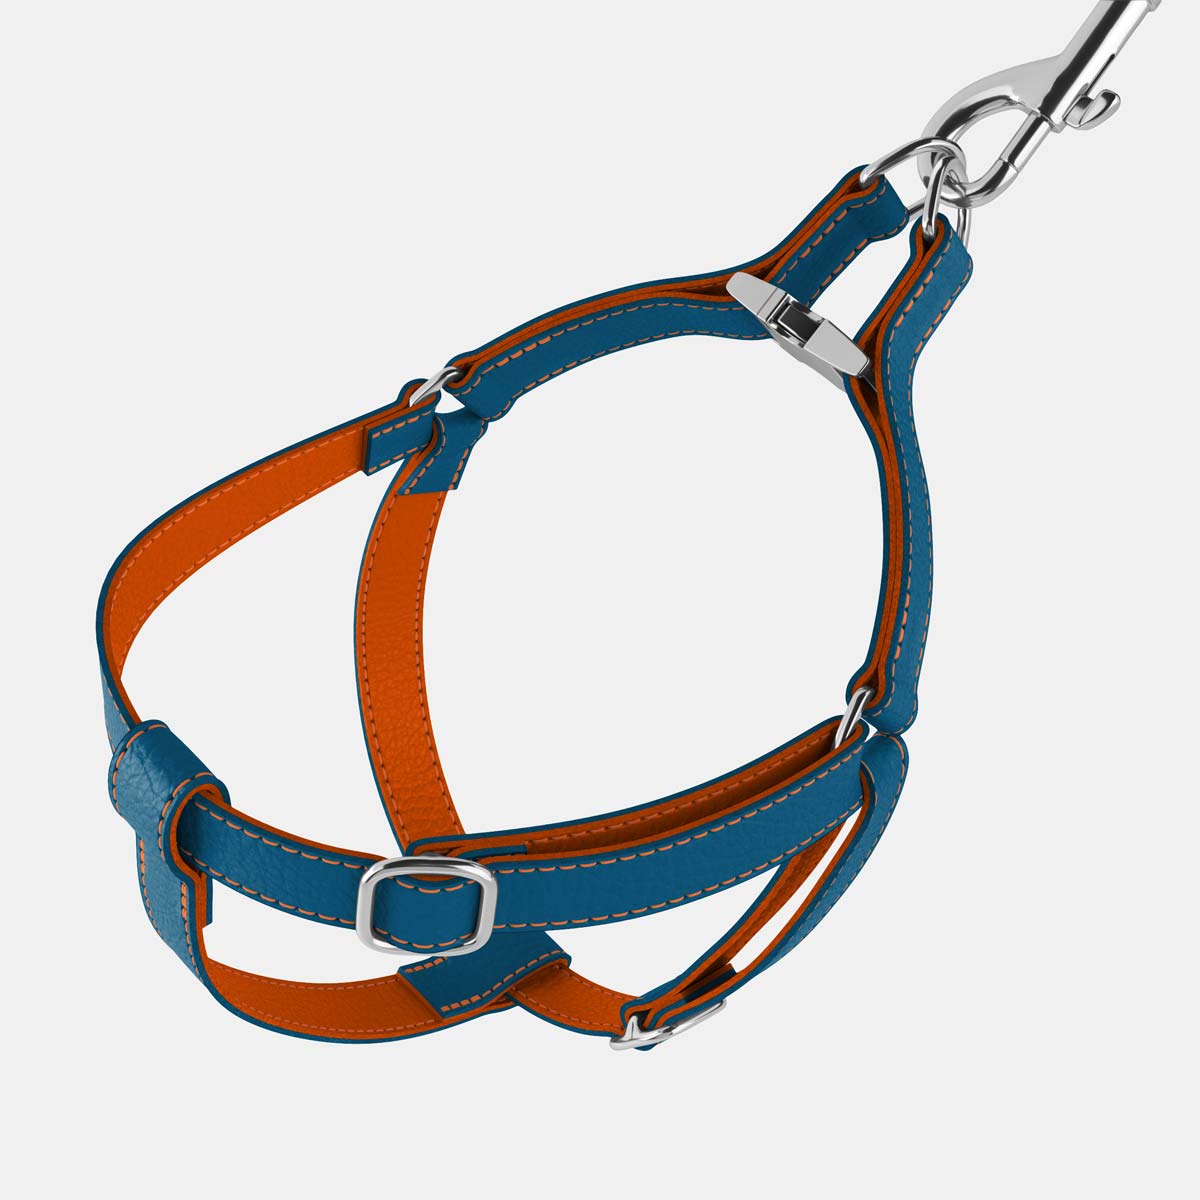 Leather Dog Harness - Blue and Orange - RYAN London